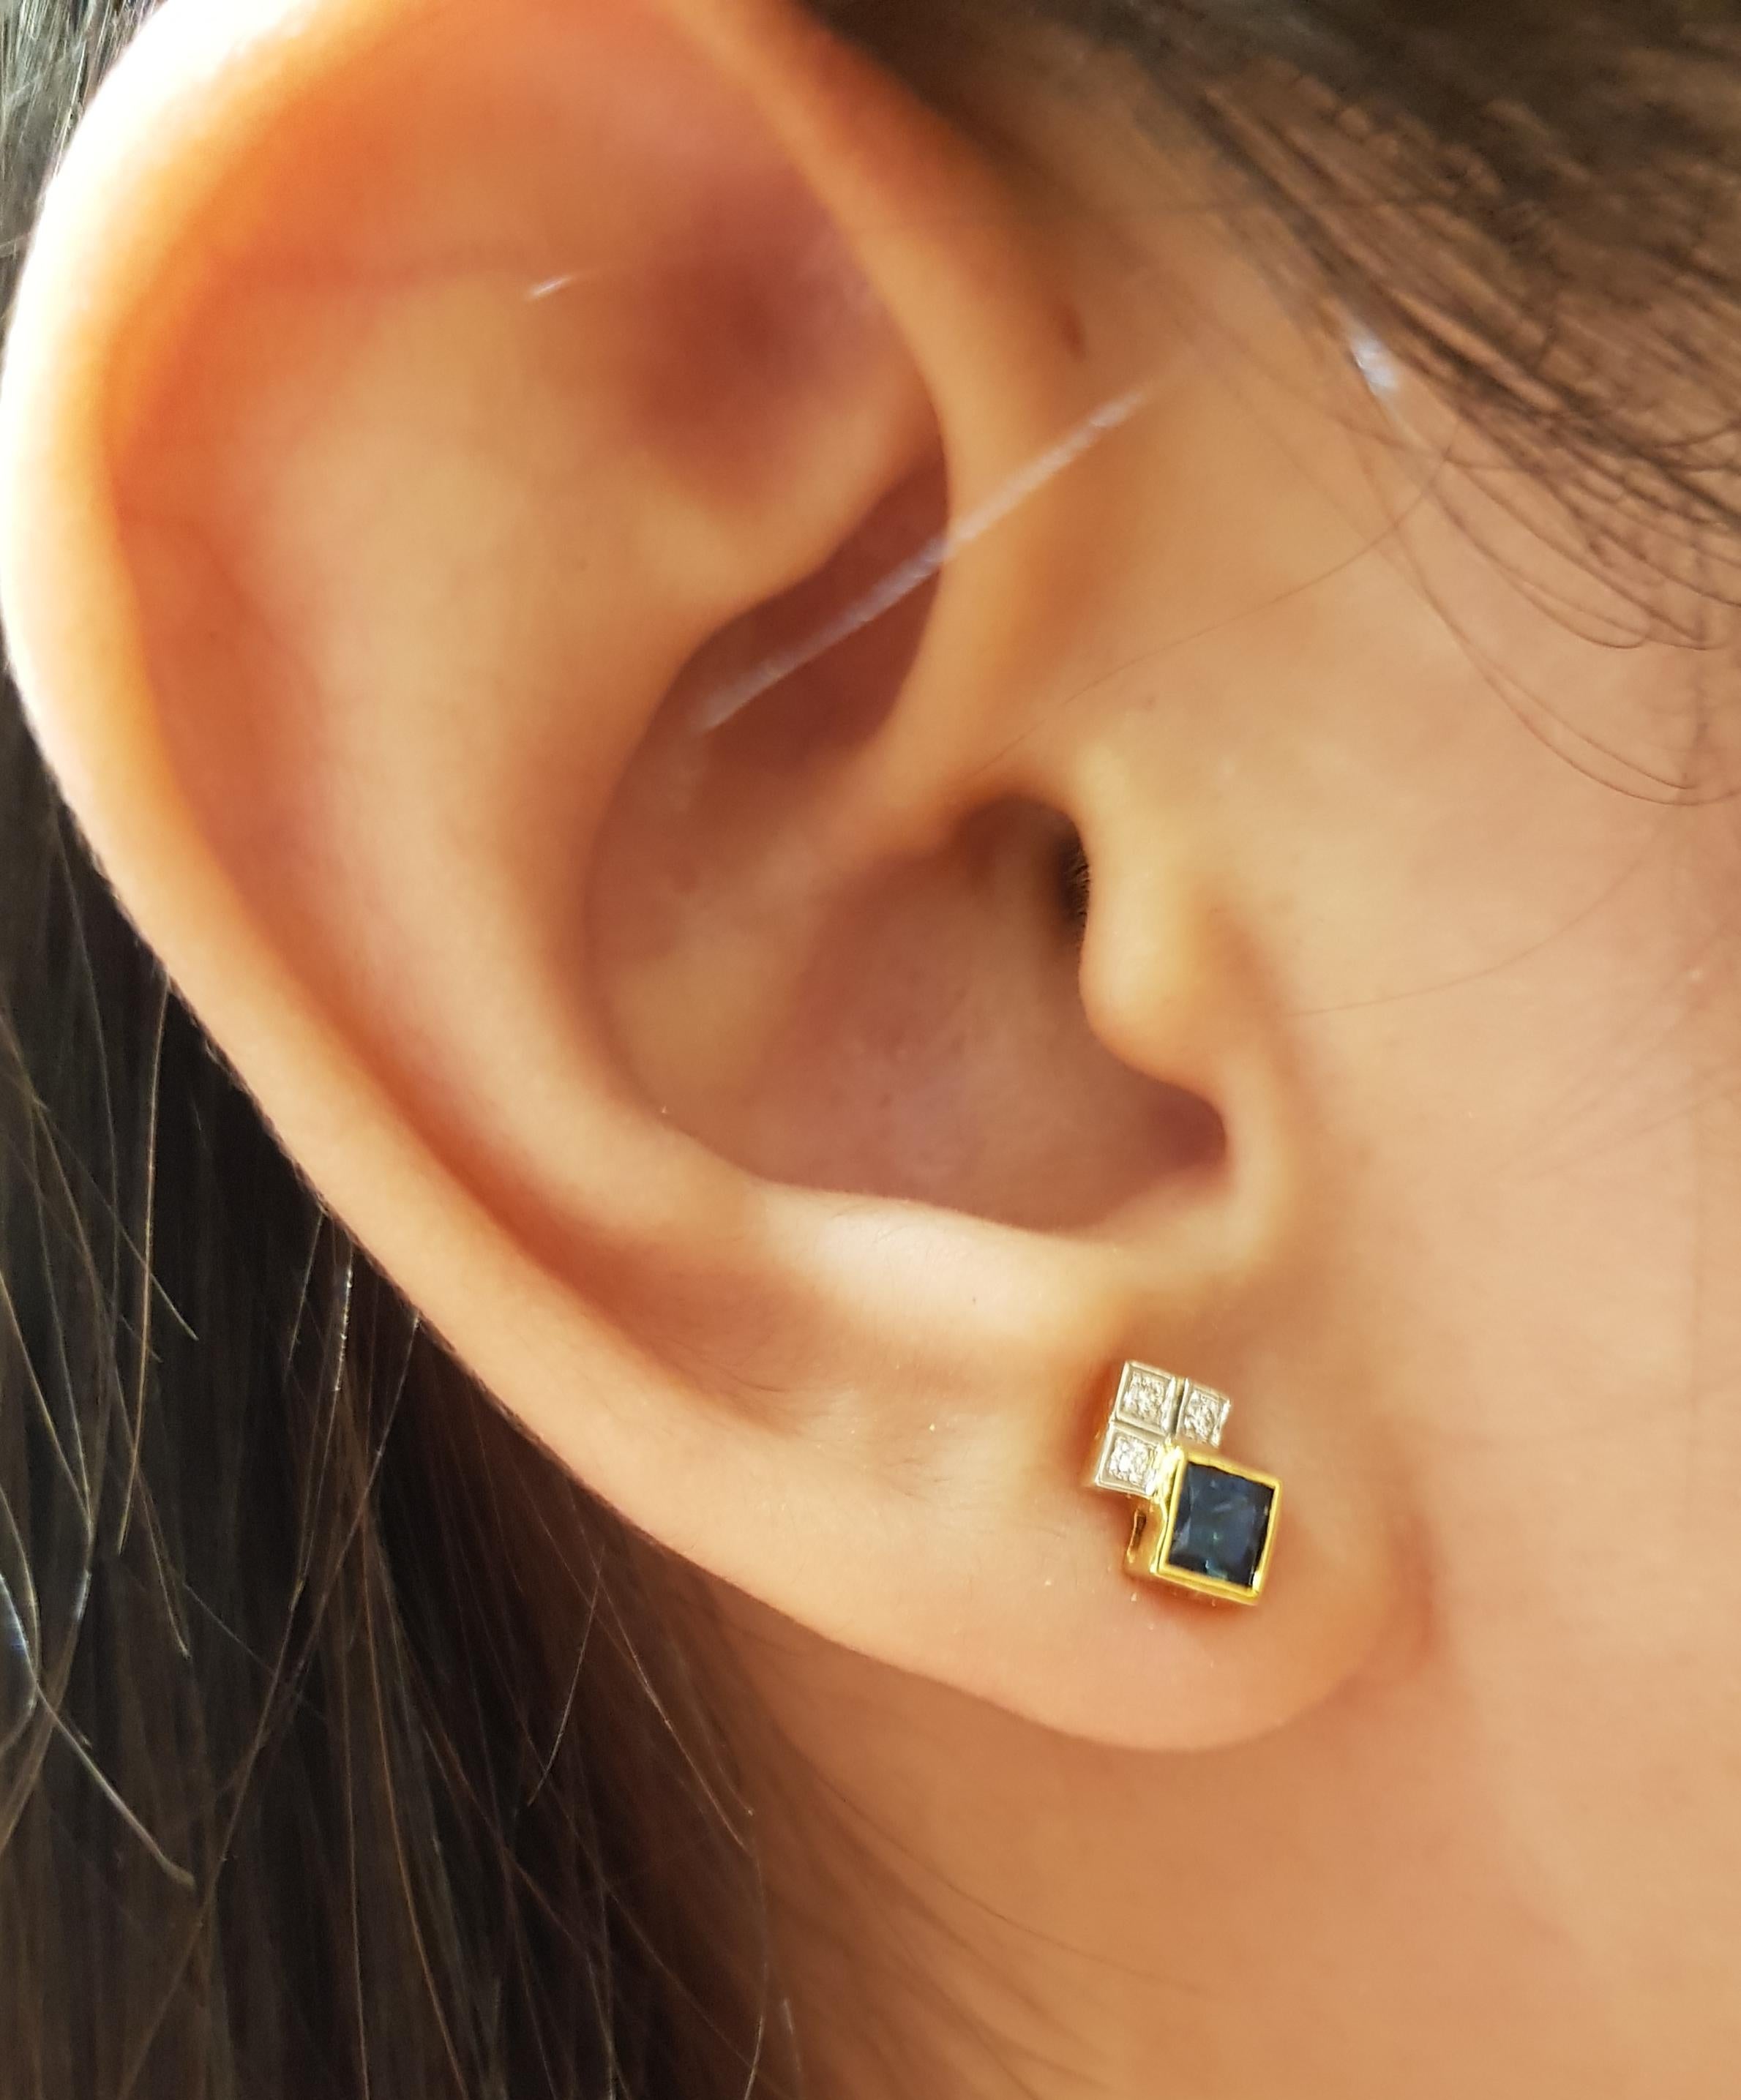 Blue Sapphire 0.60 carat with Diamond 0.05 carat Earrings set in 18 Karat Gold Settings

Width:  0.6 cm 
Length:  0.9 cm
Total Weight: 1.91 grams

